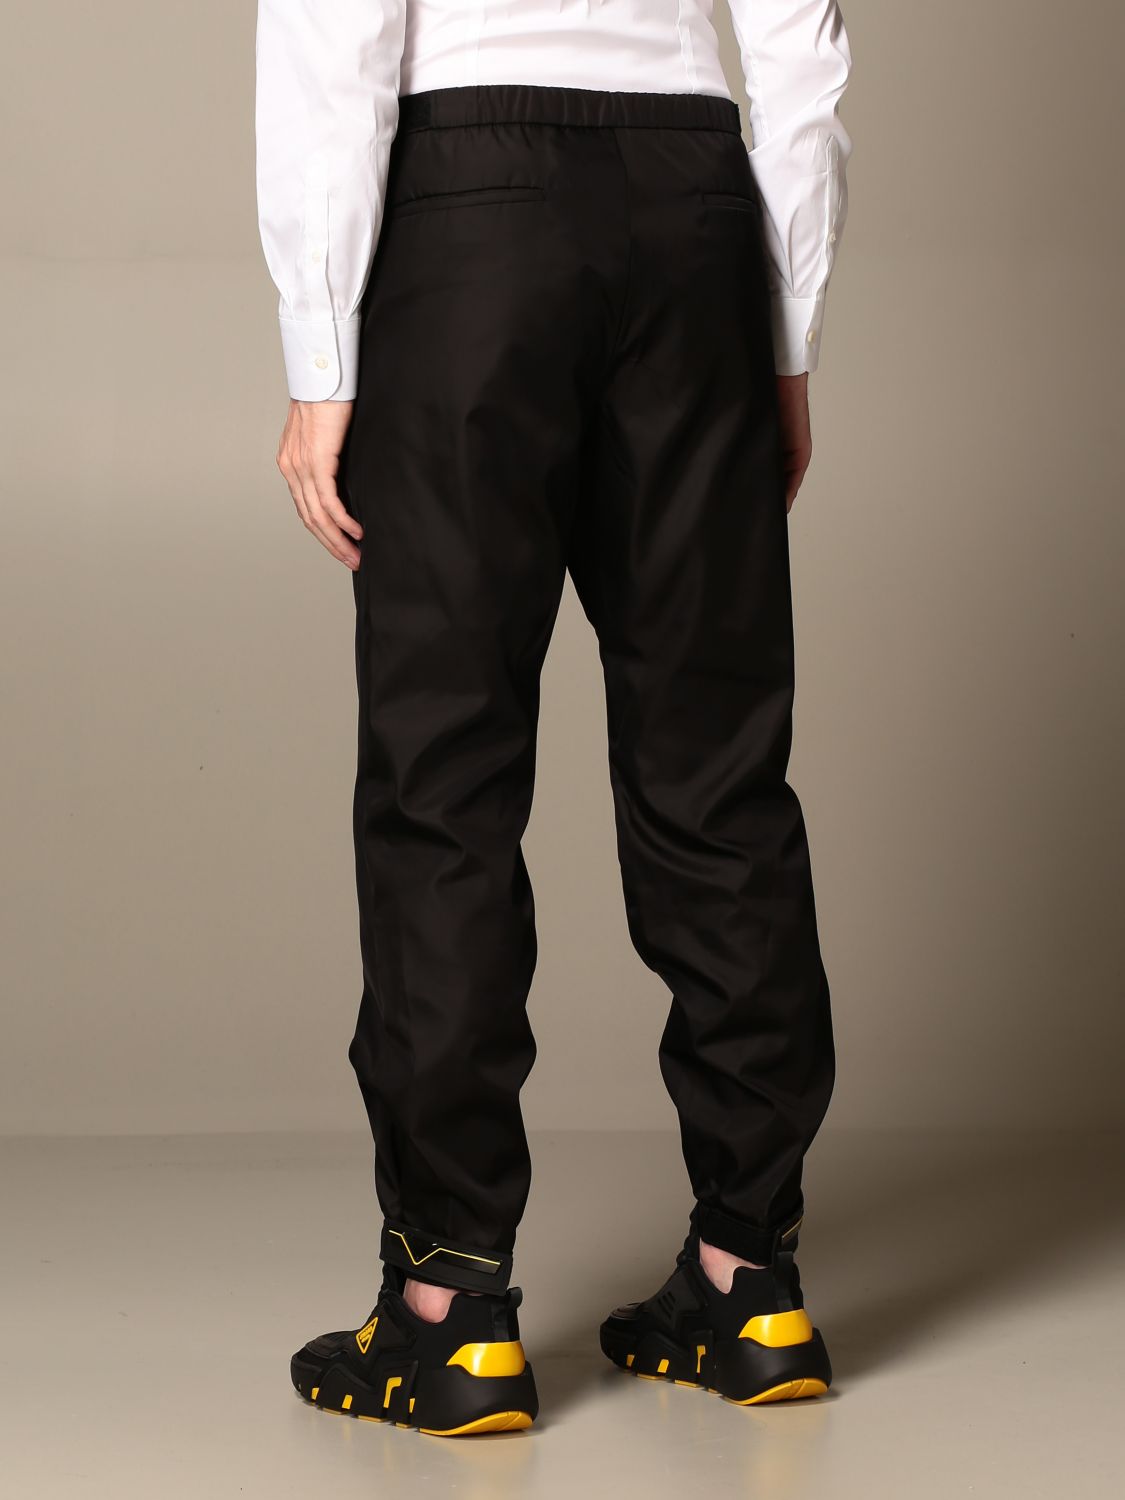 PRADA: nylon trousers with tear tabs - Black | Prada pants SPH79 1XVZ ...